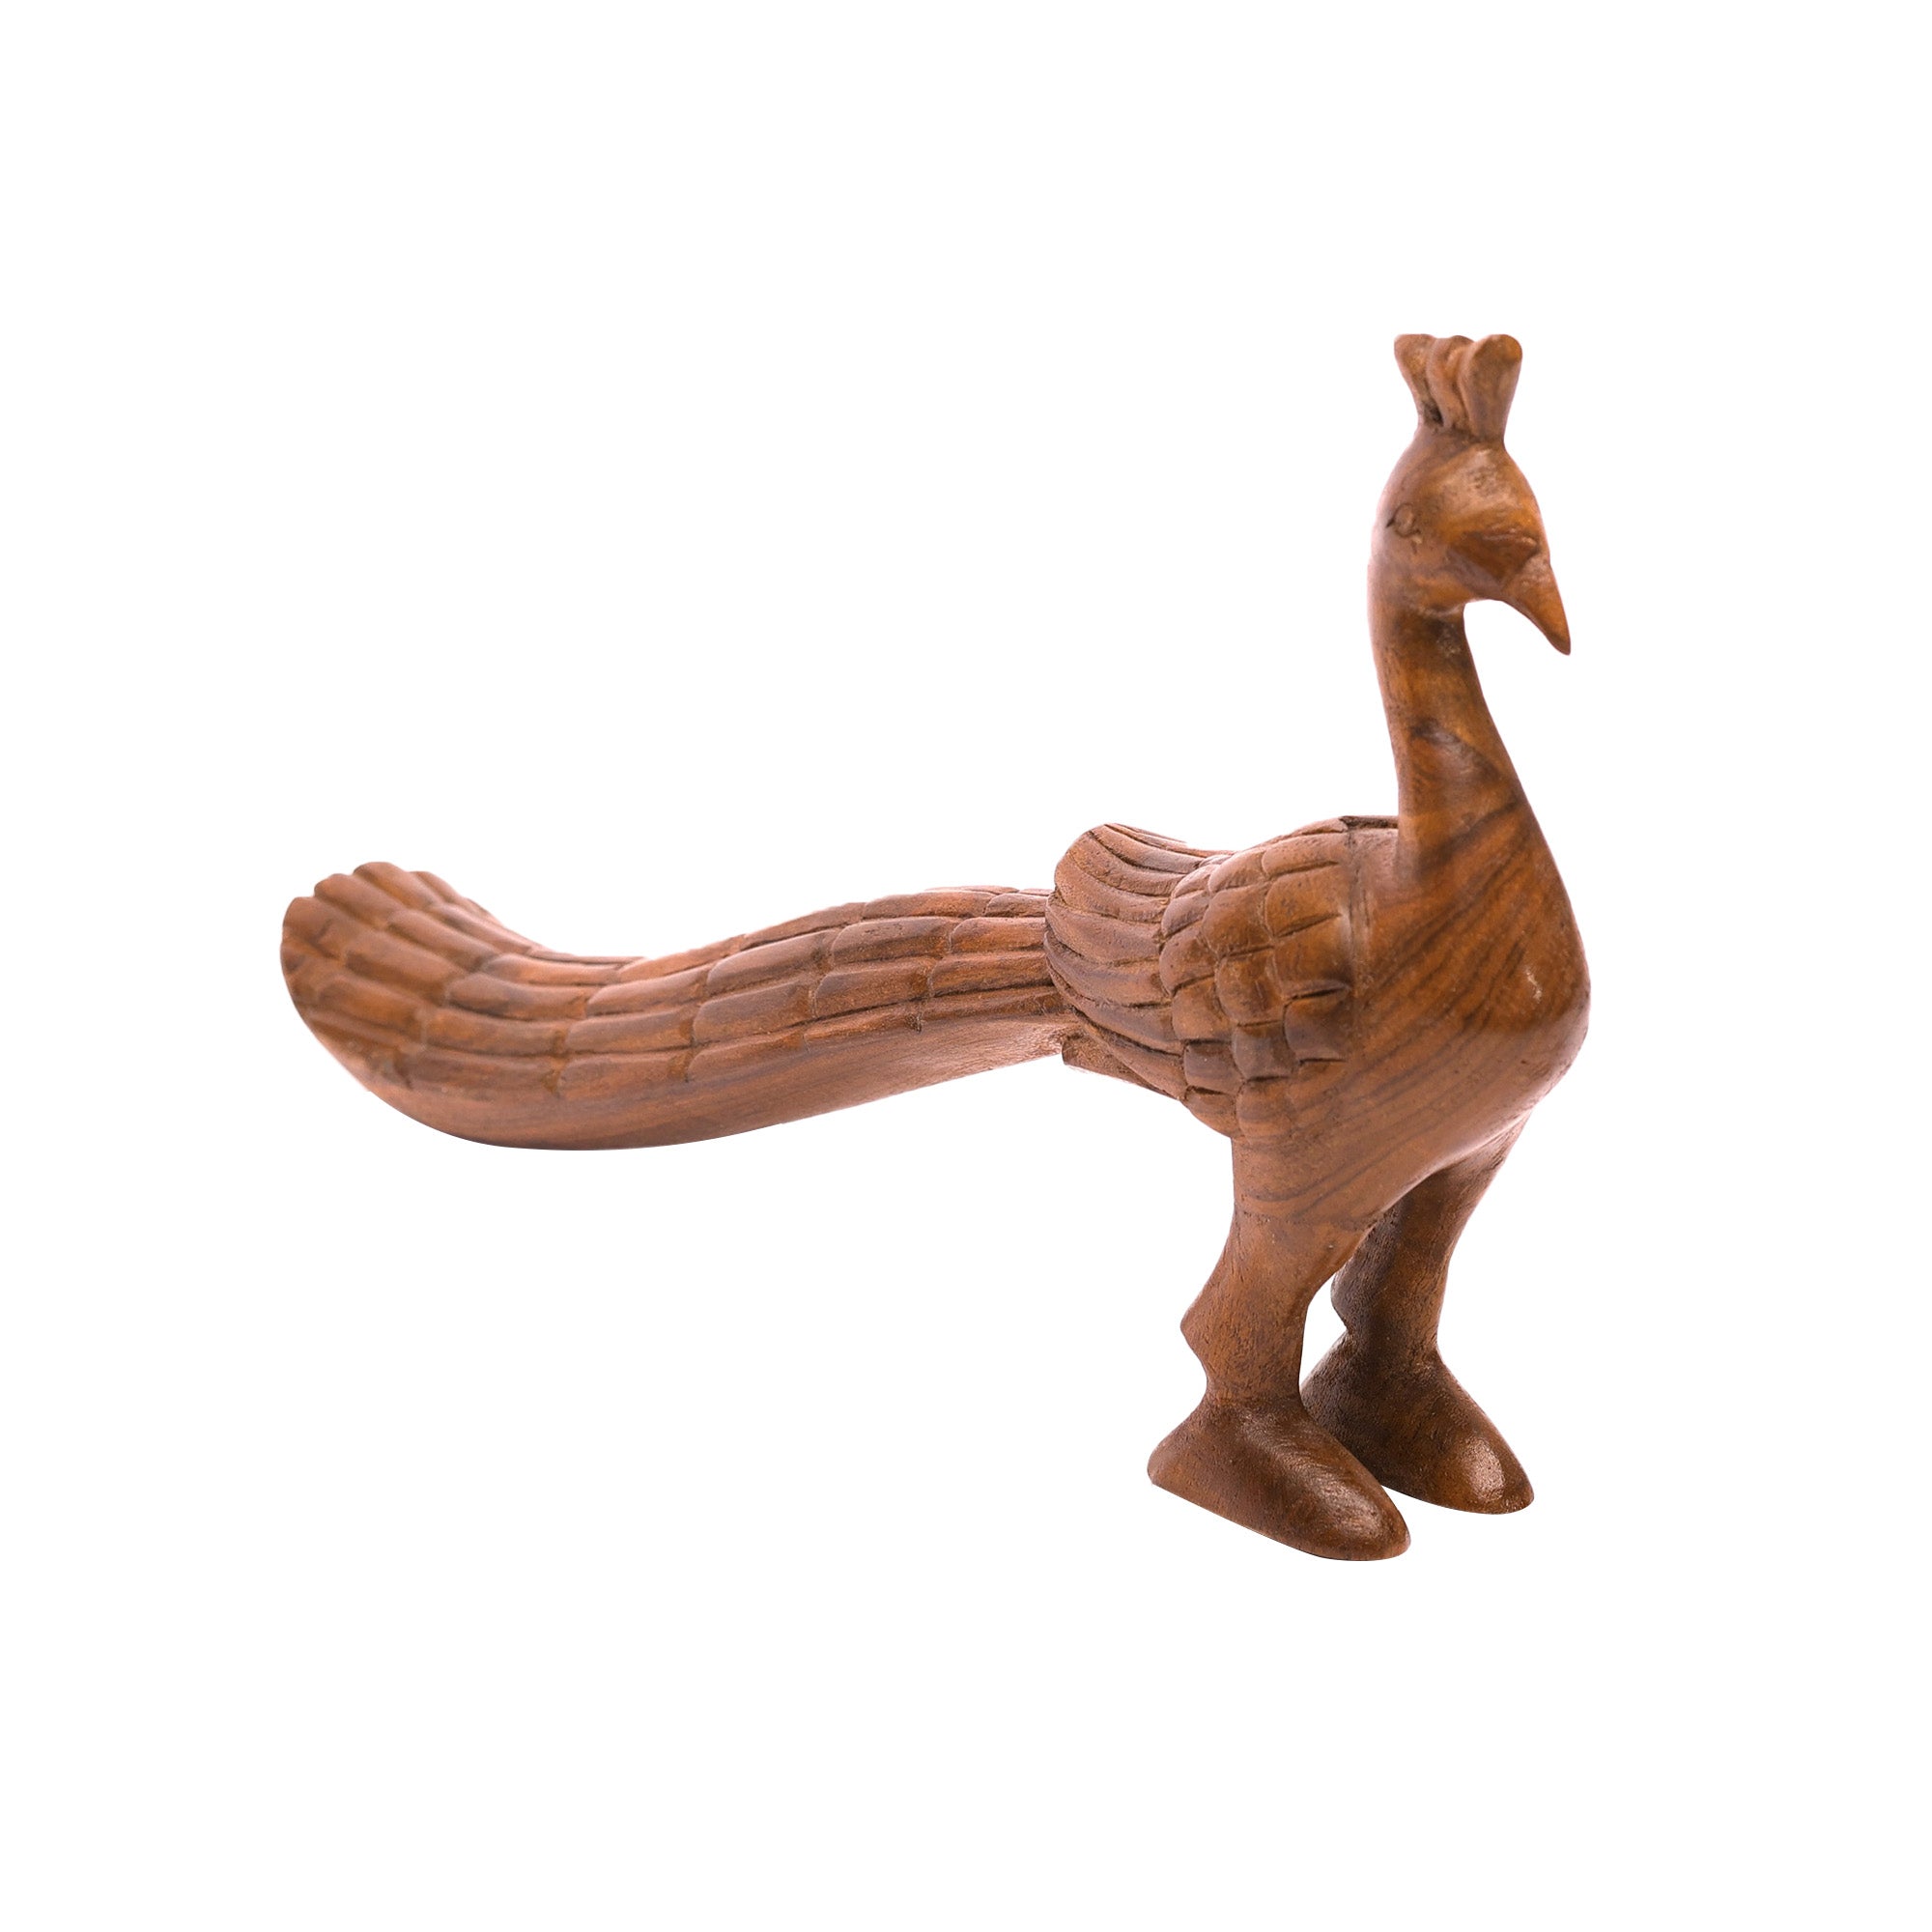 Royal Wooden Peacock Showpiece Animal Figurine